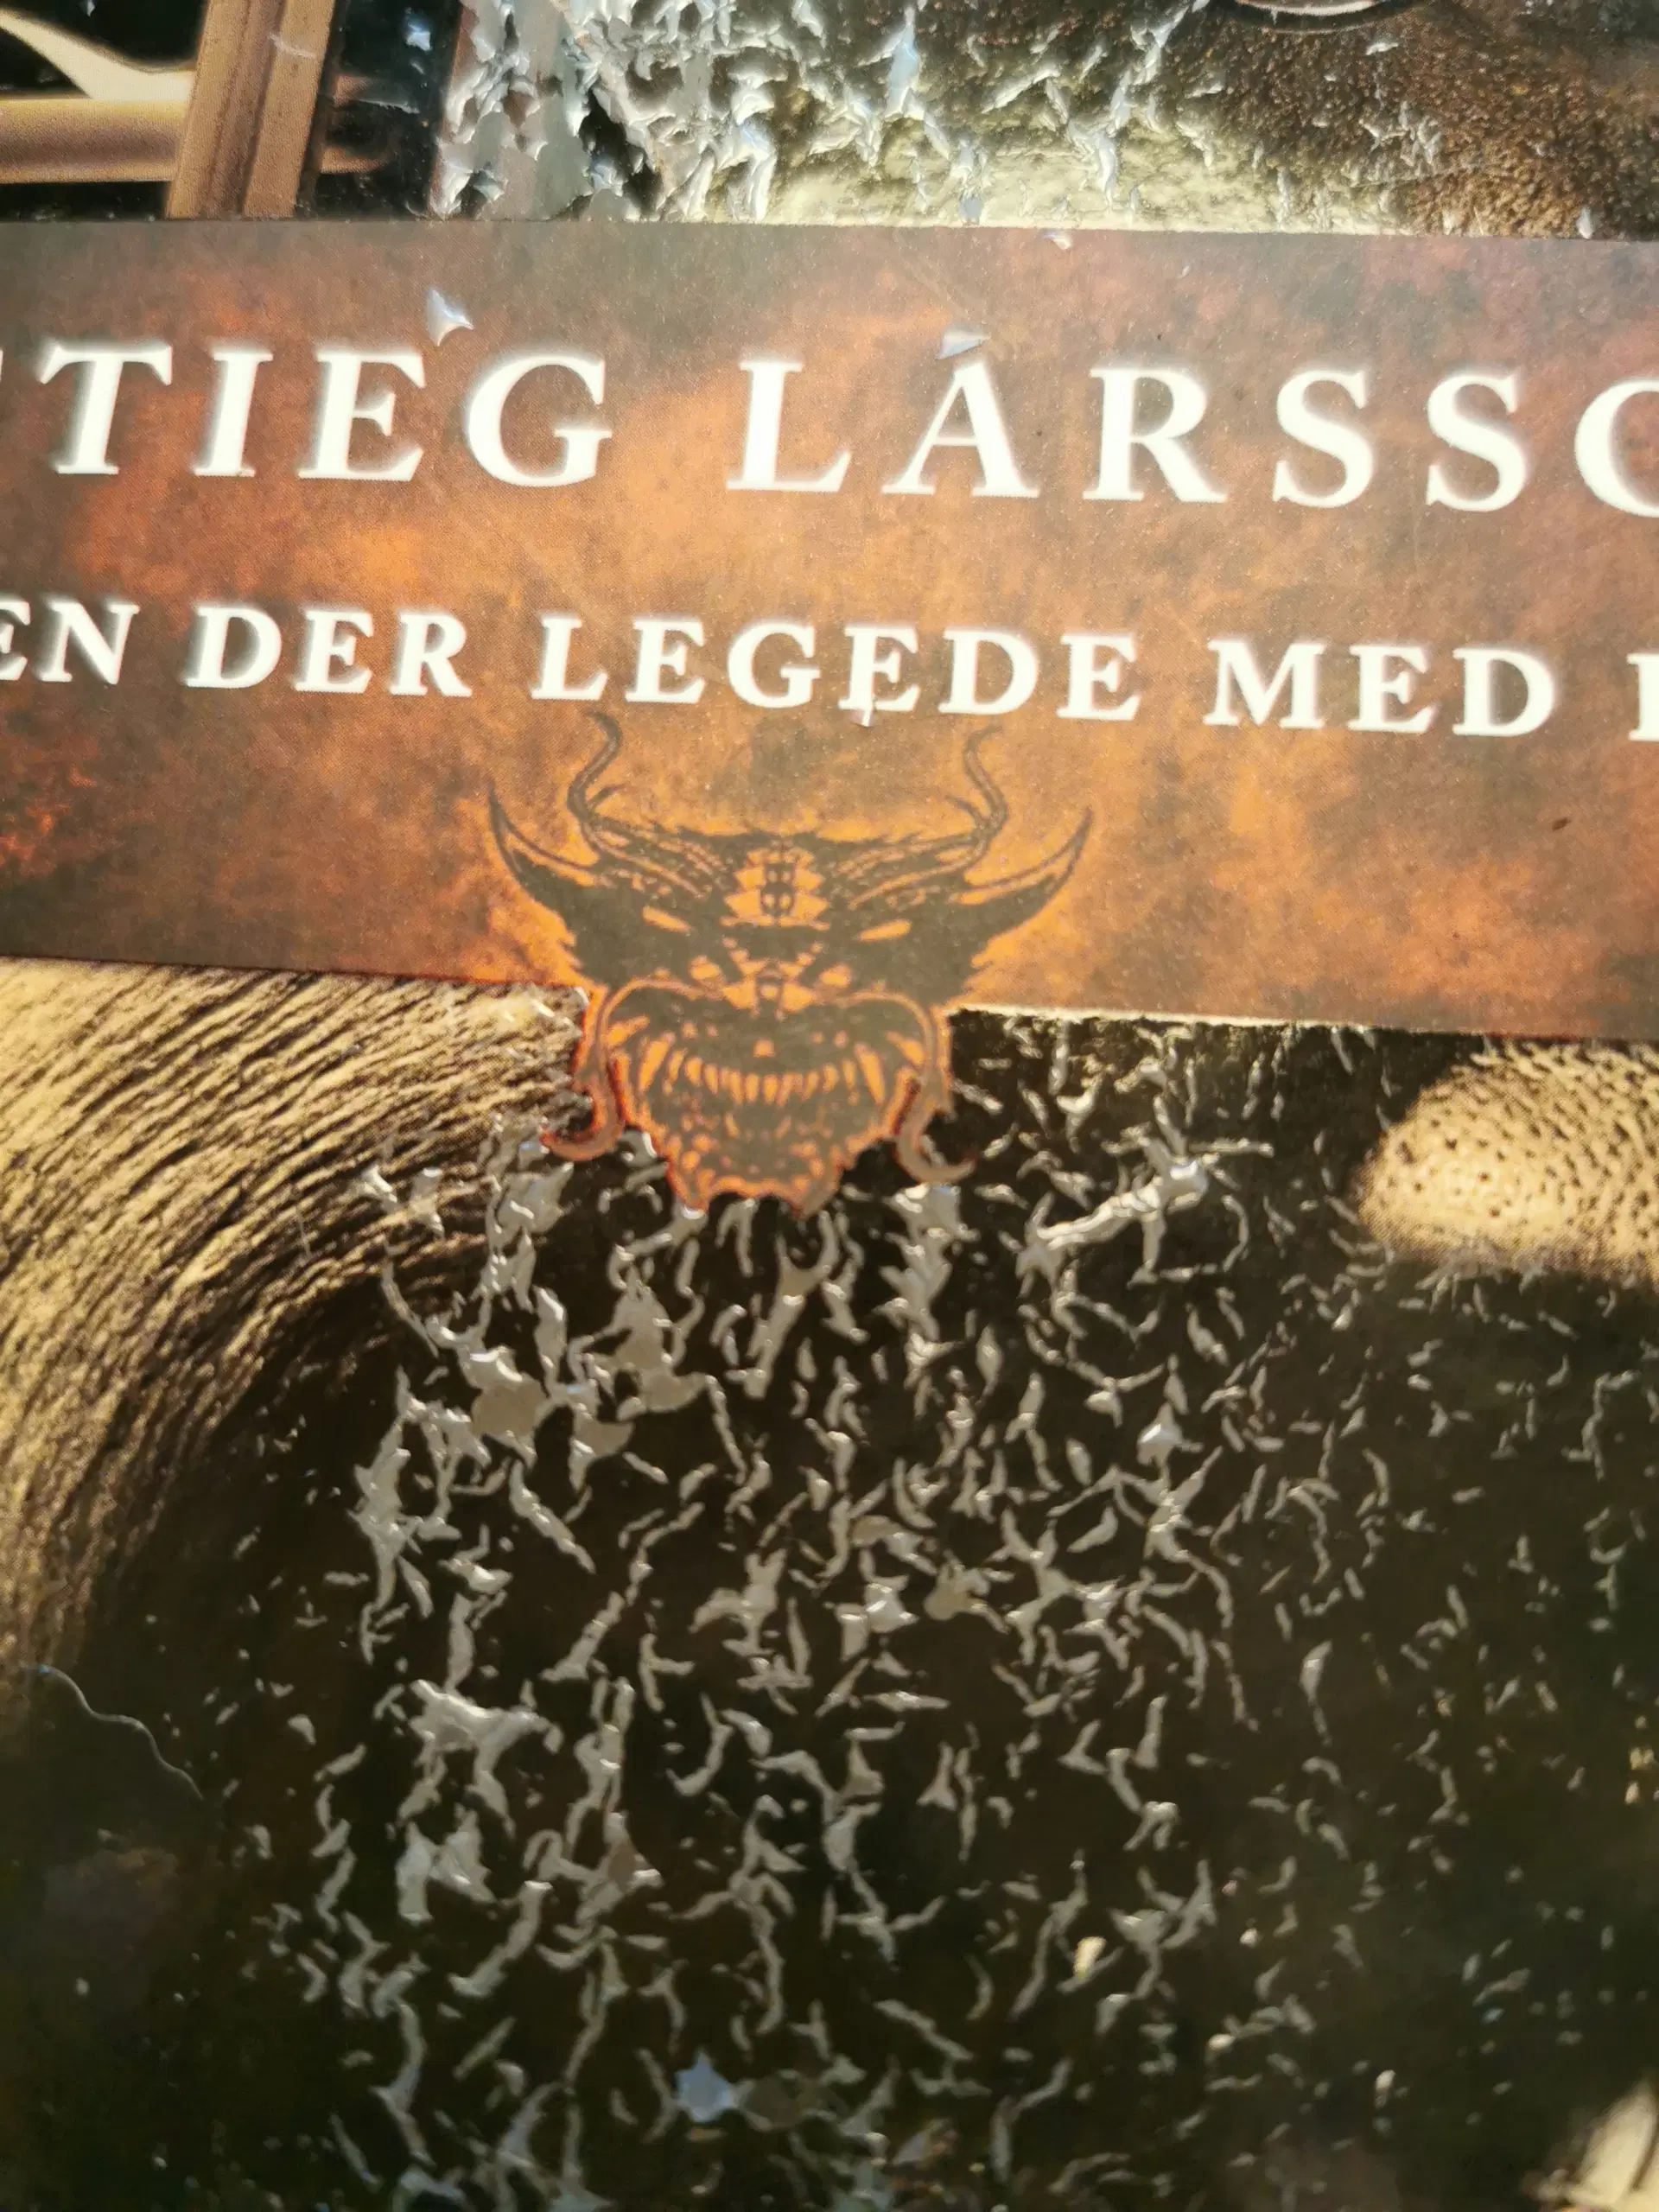 Stig Larsson triologi